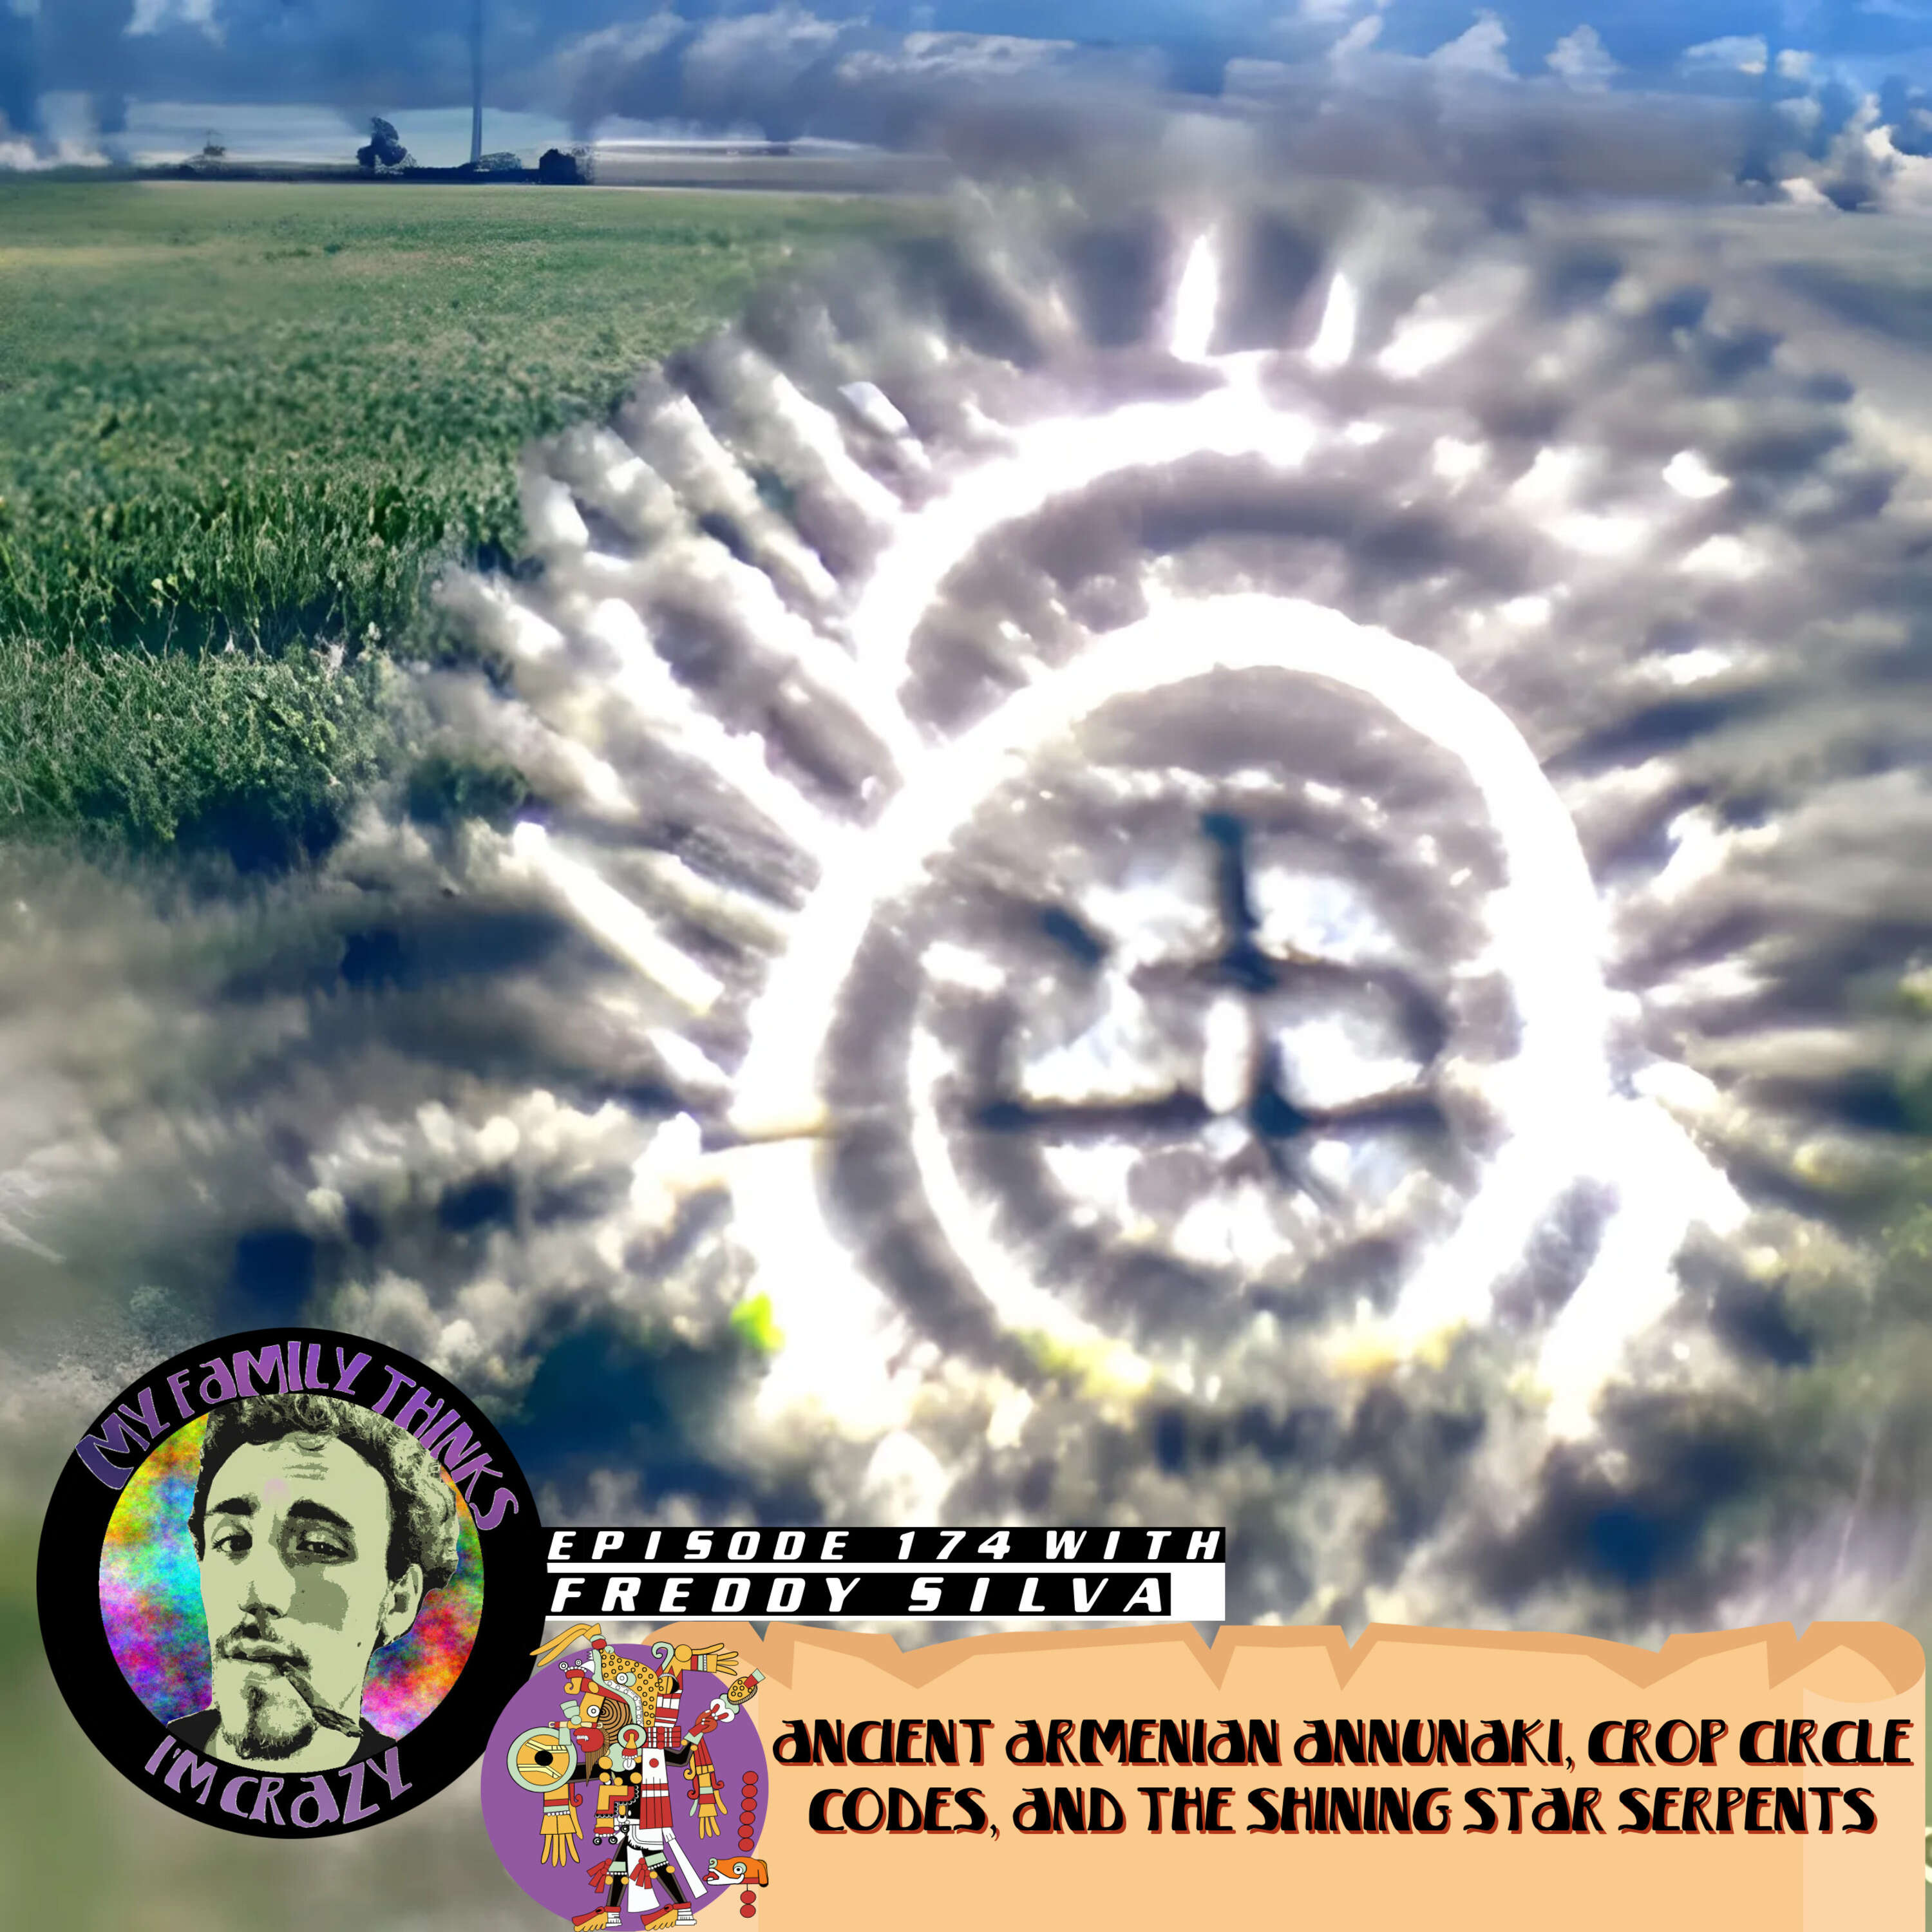 Freddy Silva | Ancient Armenian Annunaki, Crop Circle Codes, and The Shining Star Serpents